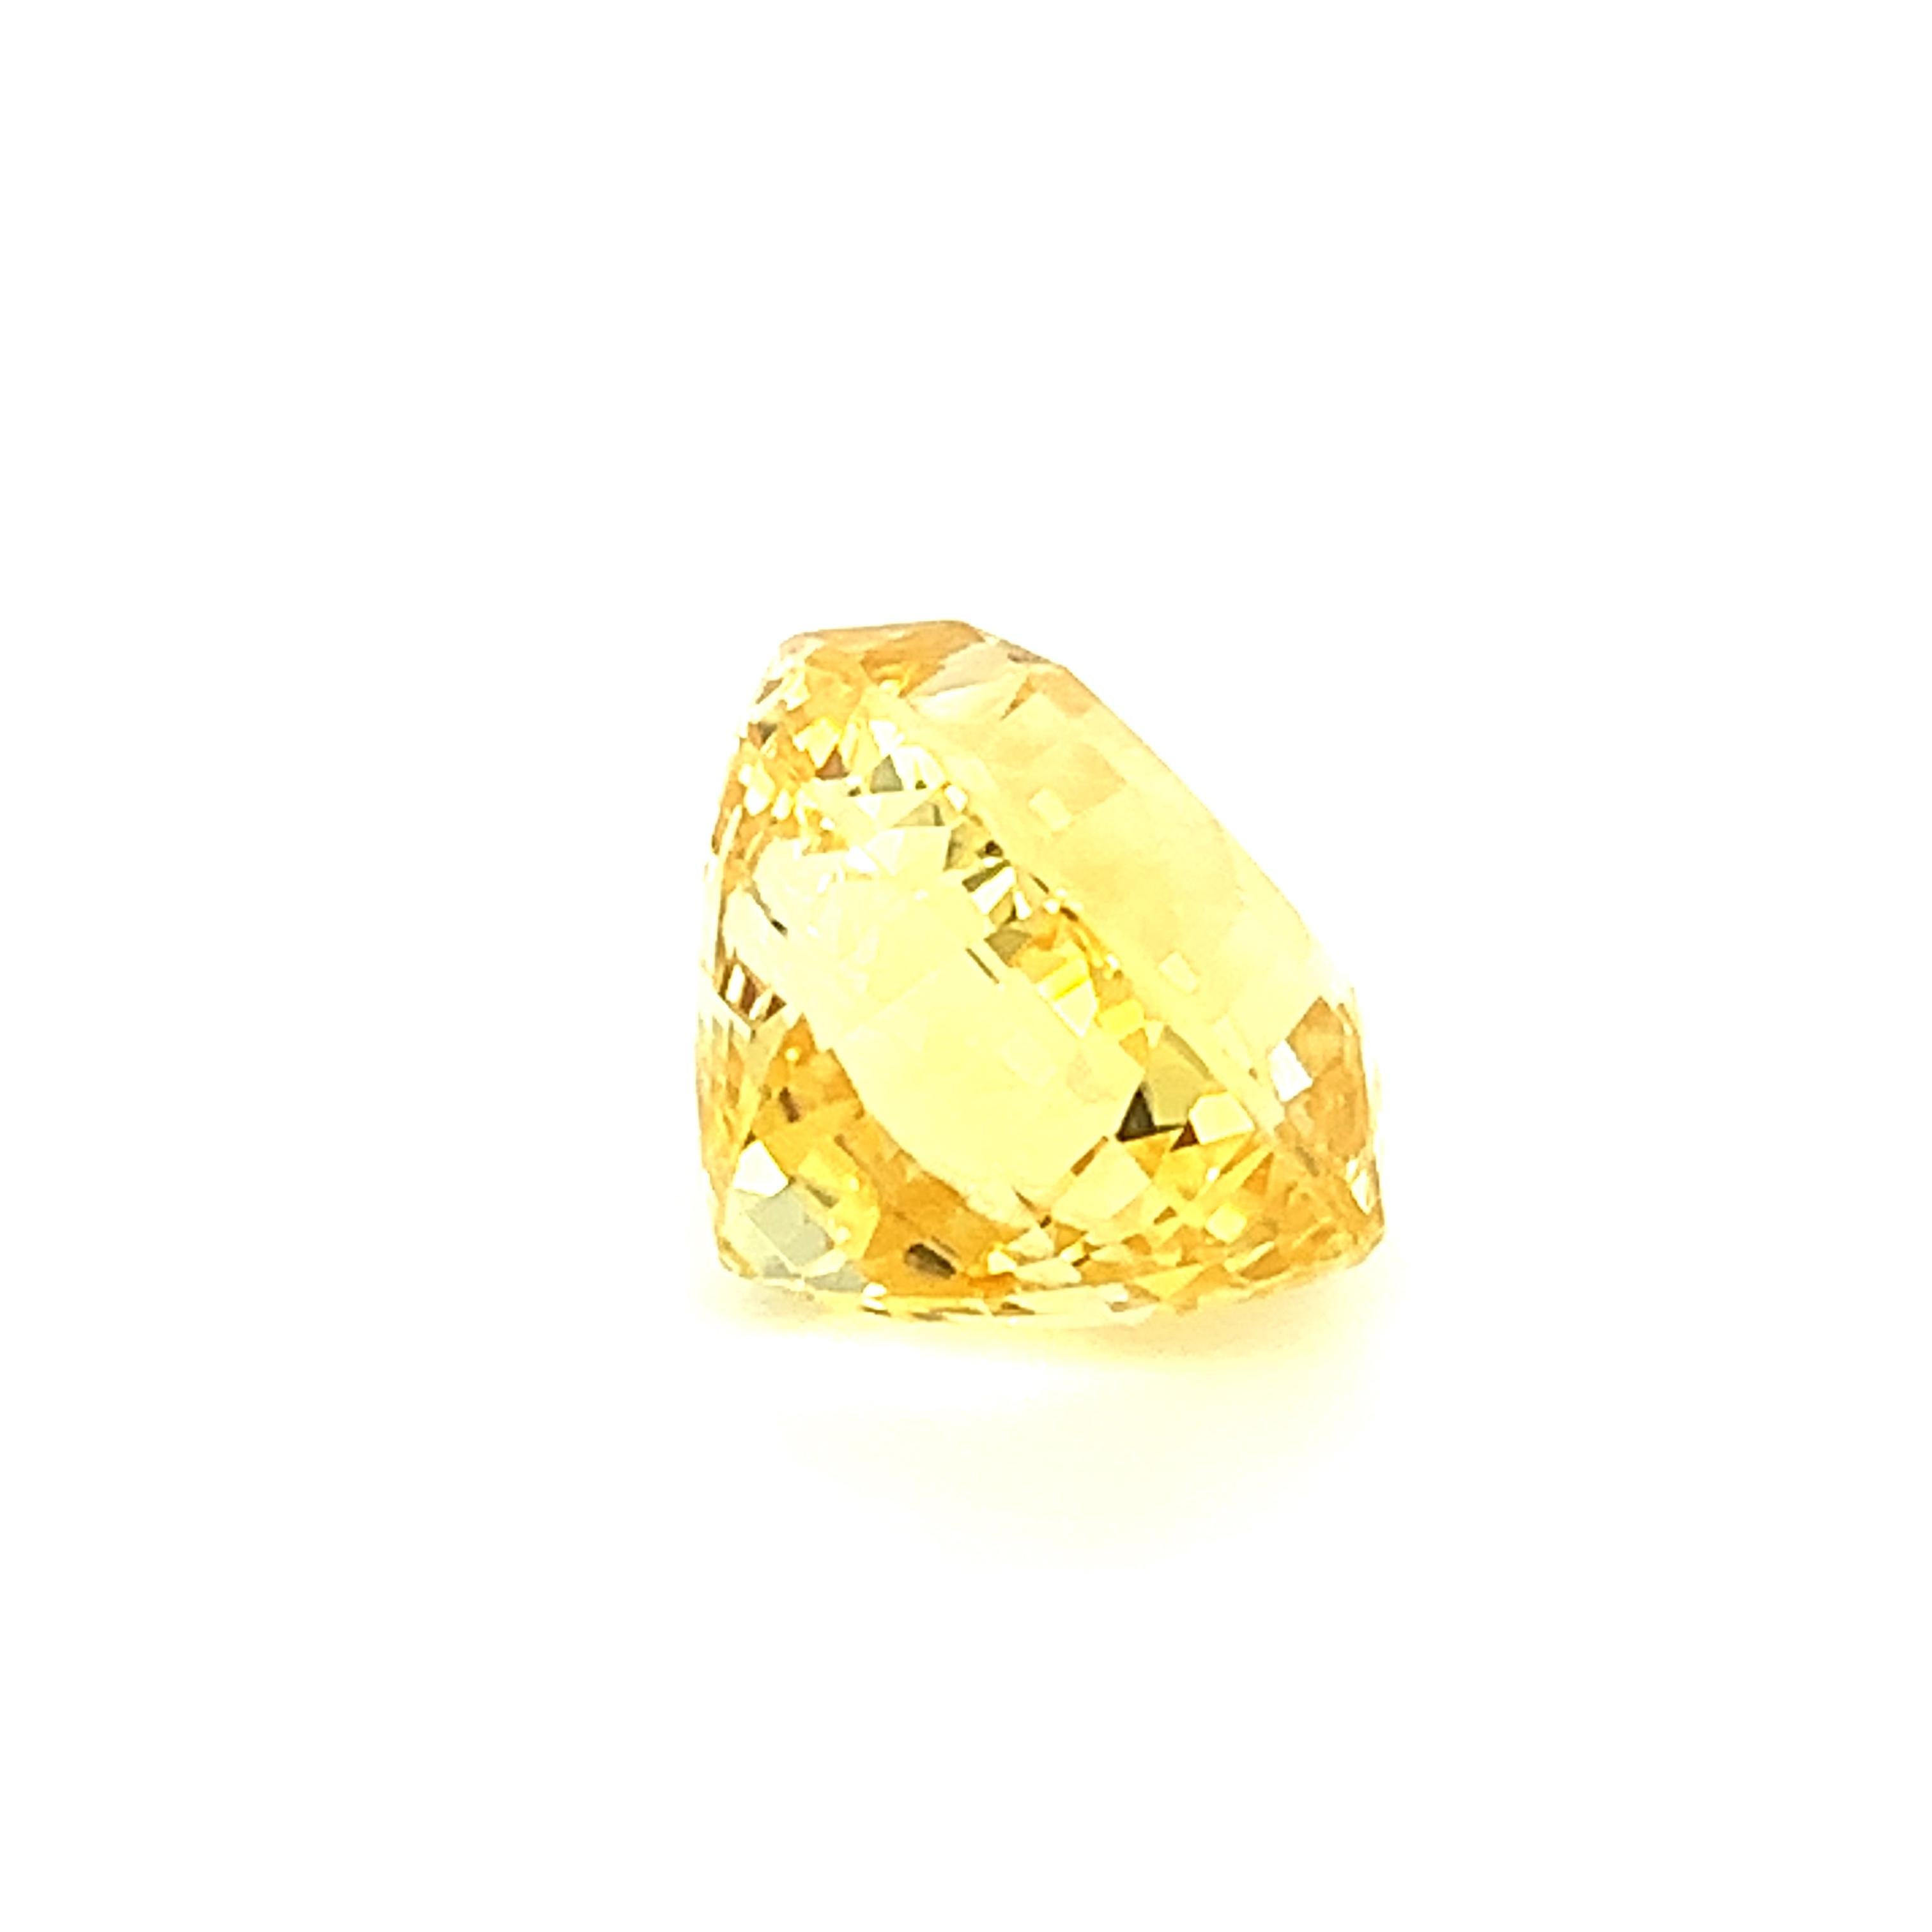 Unheated 10.78 Carat Ceylon Yellow Sapphire, Loose Gemstone, GIA Certified For Sale 2